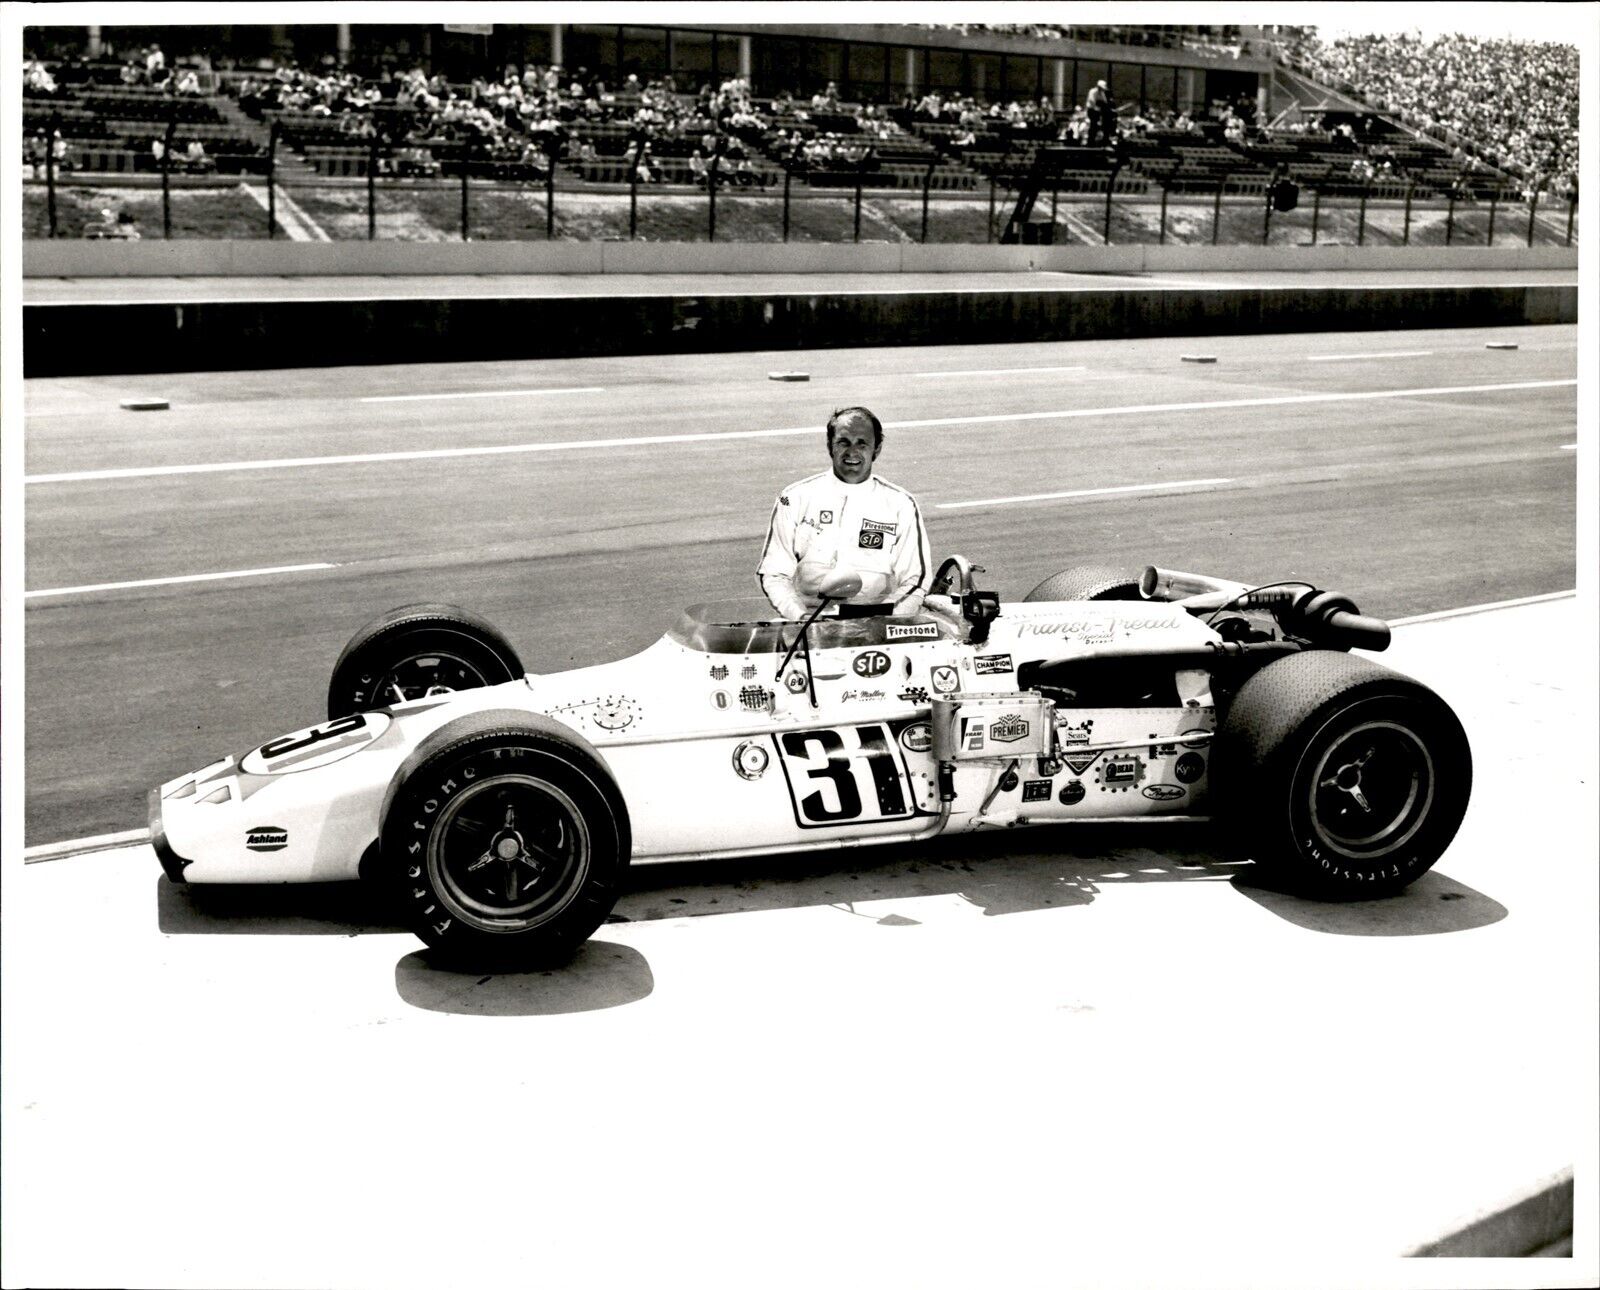 LD321 1970 Original Darryl Norenberg Photo JIM MALLOY #31 CALIFORNIA 500 RACE